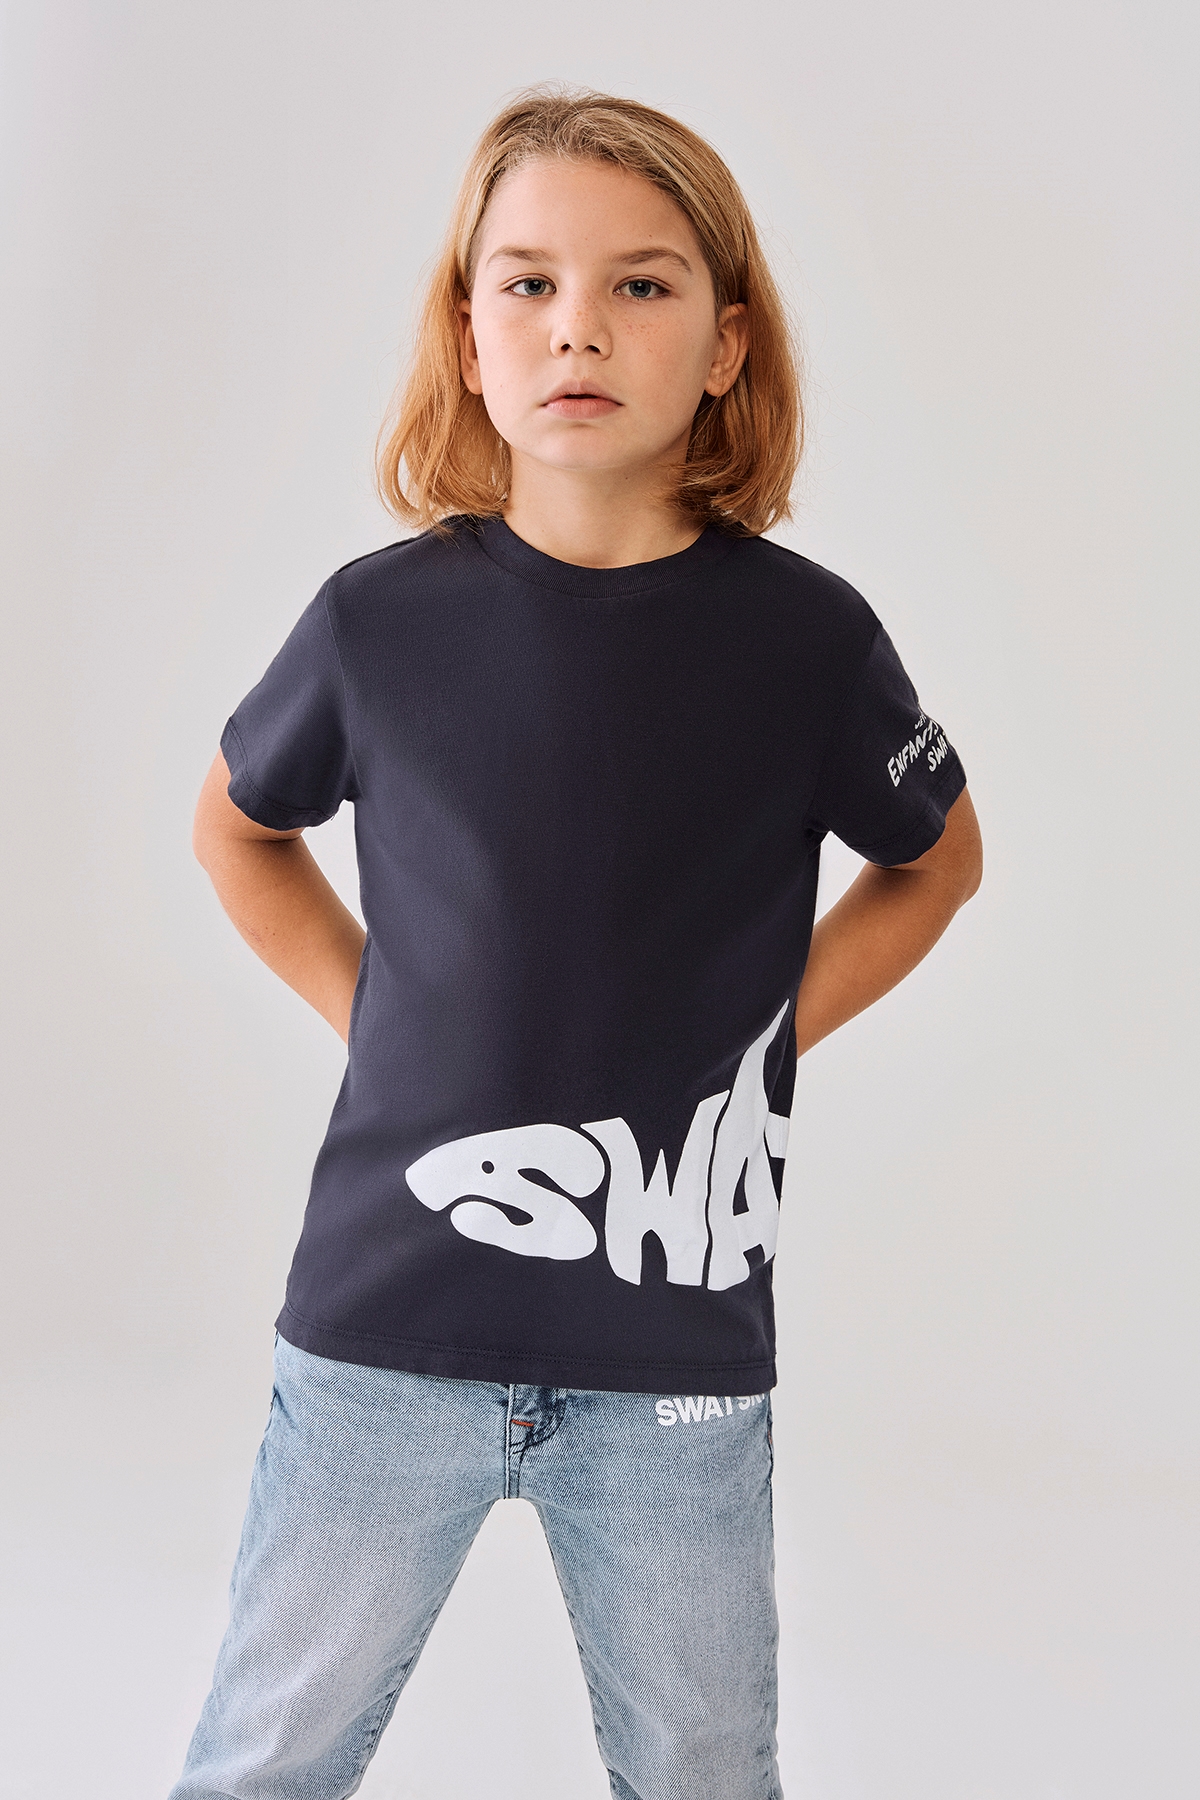 Erkek Çocuk Lacivert T-Shirt